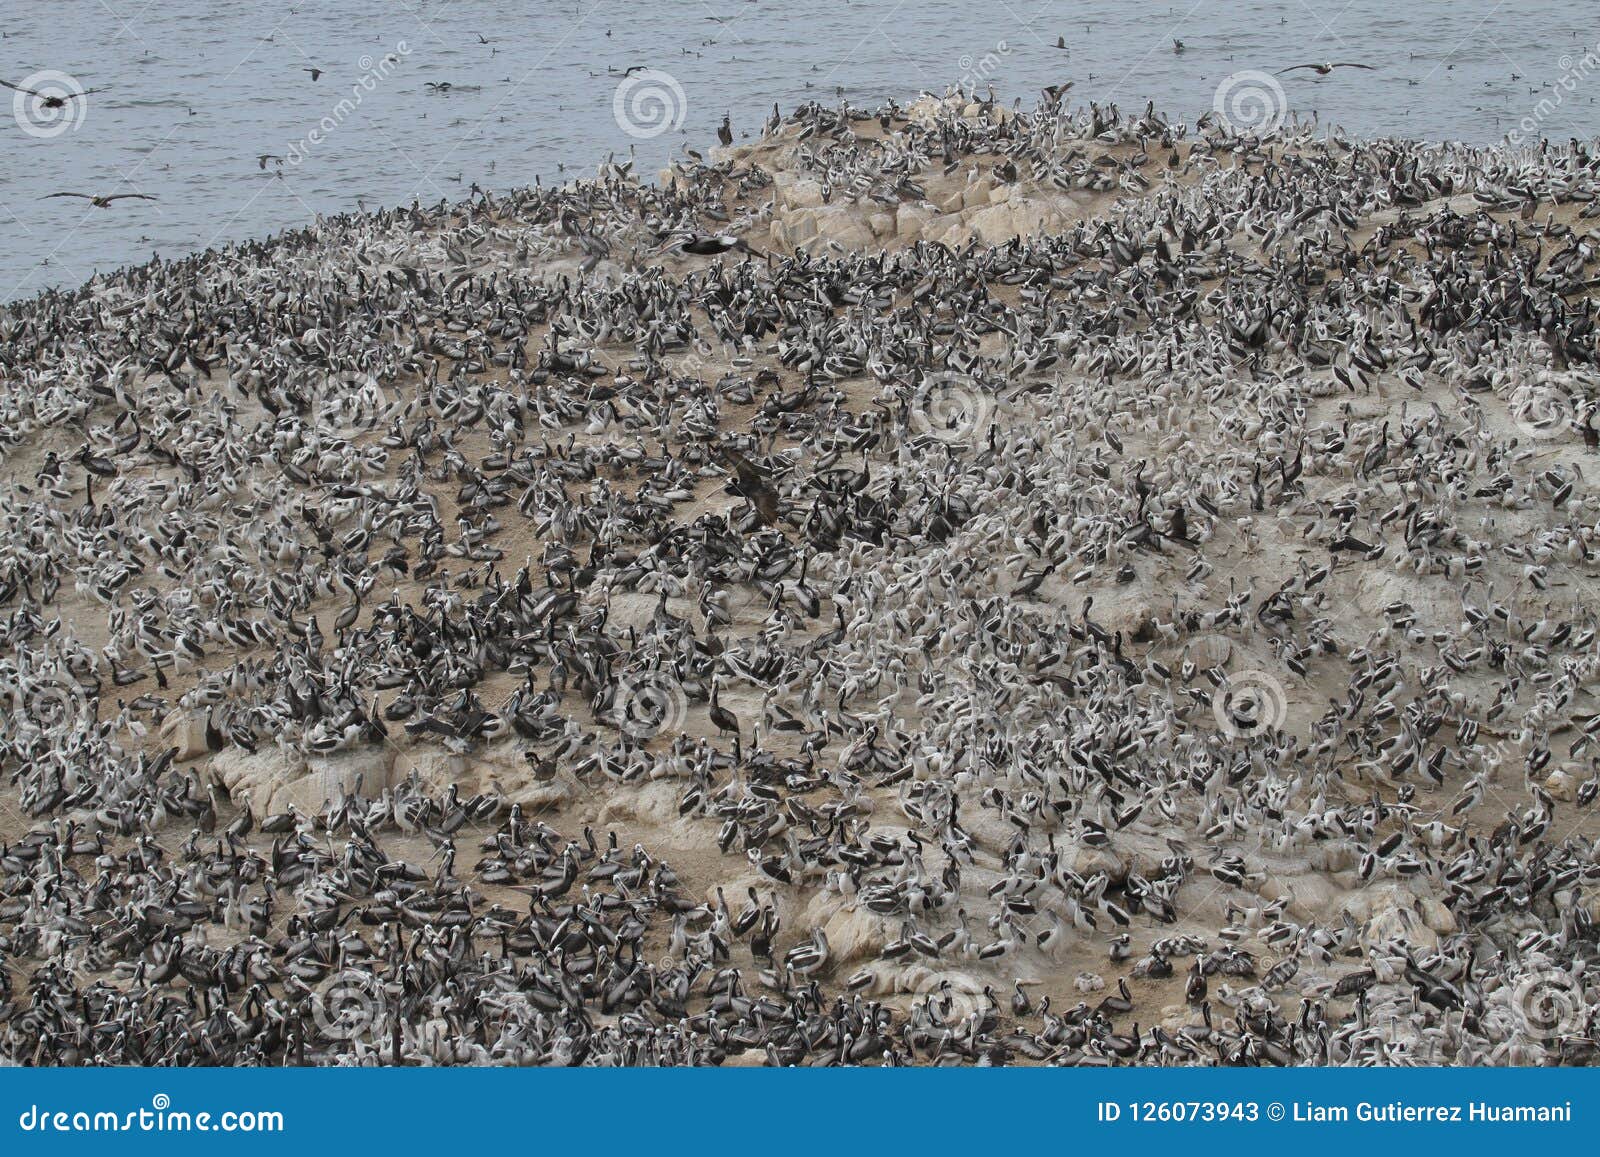 Peruvian Pelican Breeding Colony on Guano Island Stock Image - Image of ...